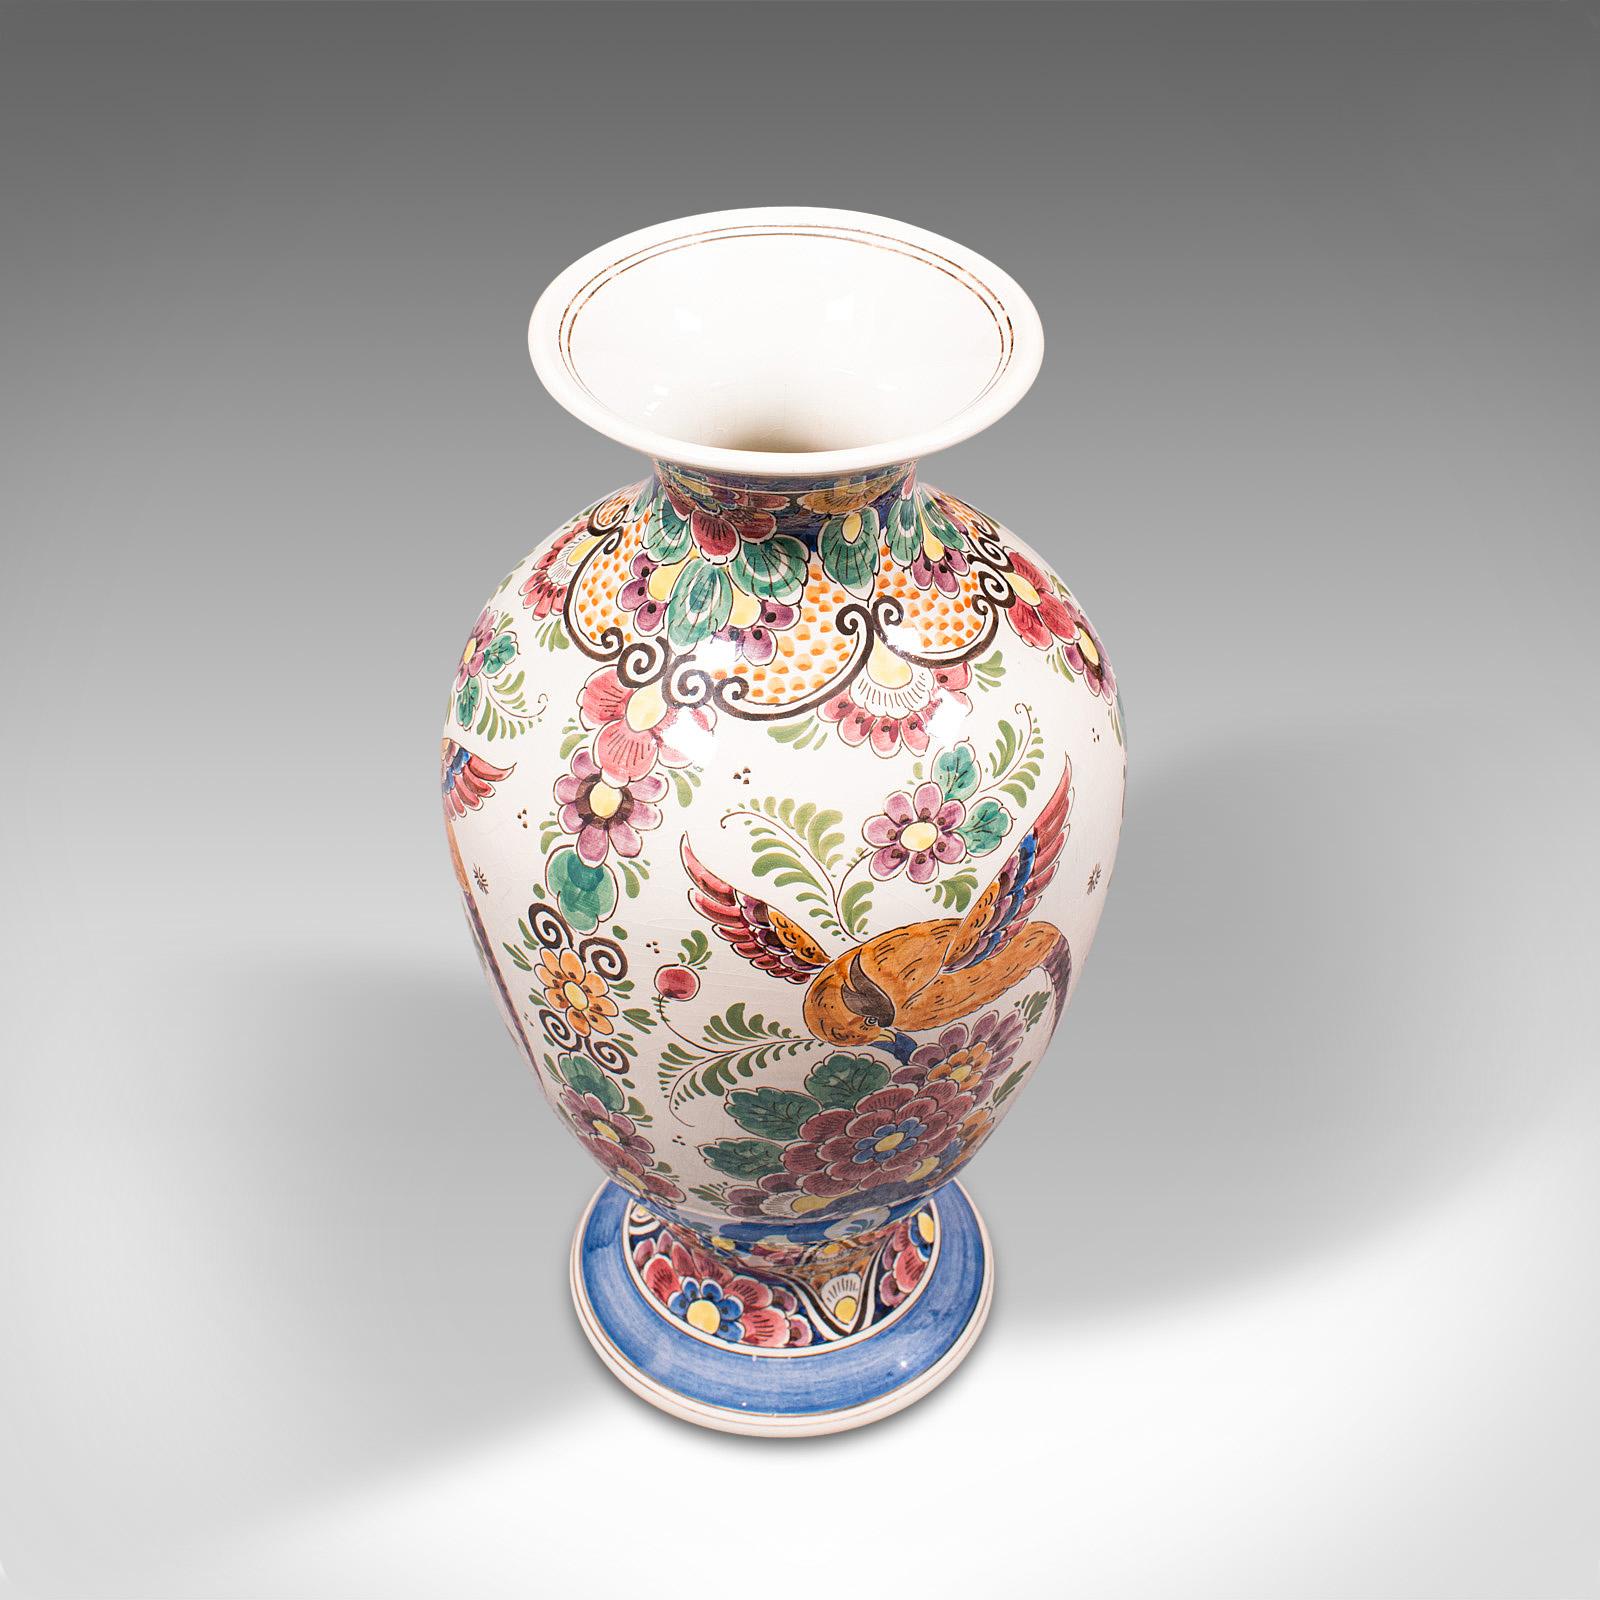 Vintage Polychromatic Vase, Dutch, Delft, Ceramic, Ornament, Mid 20th.C, C.1960 For Sale 3